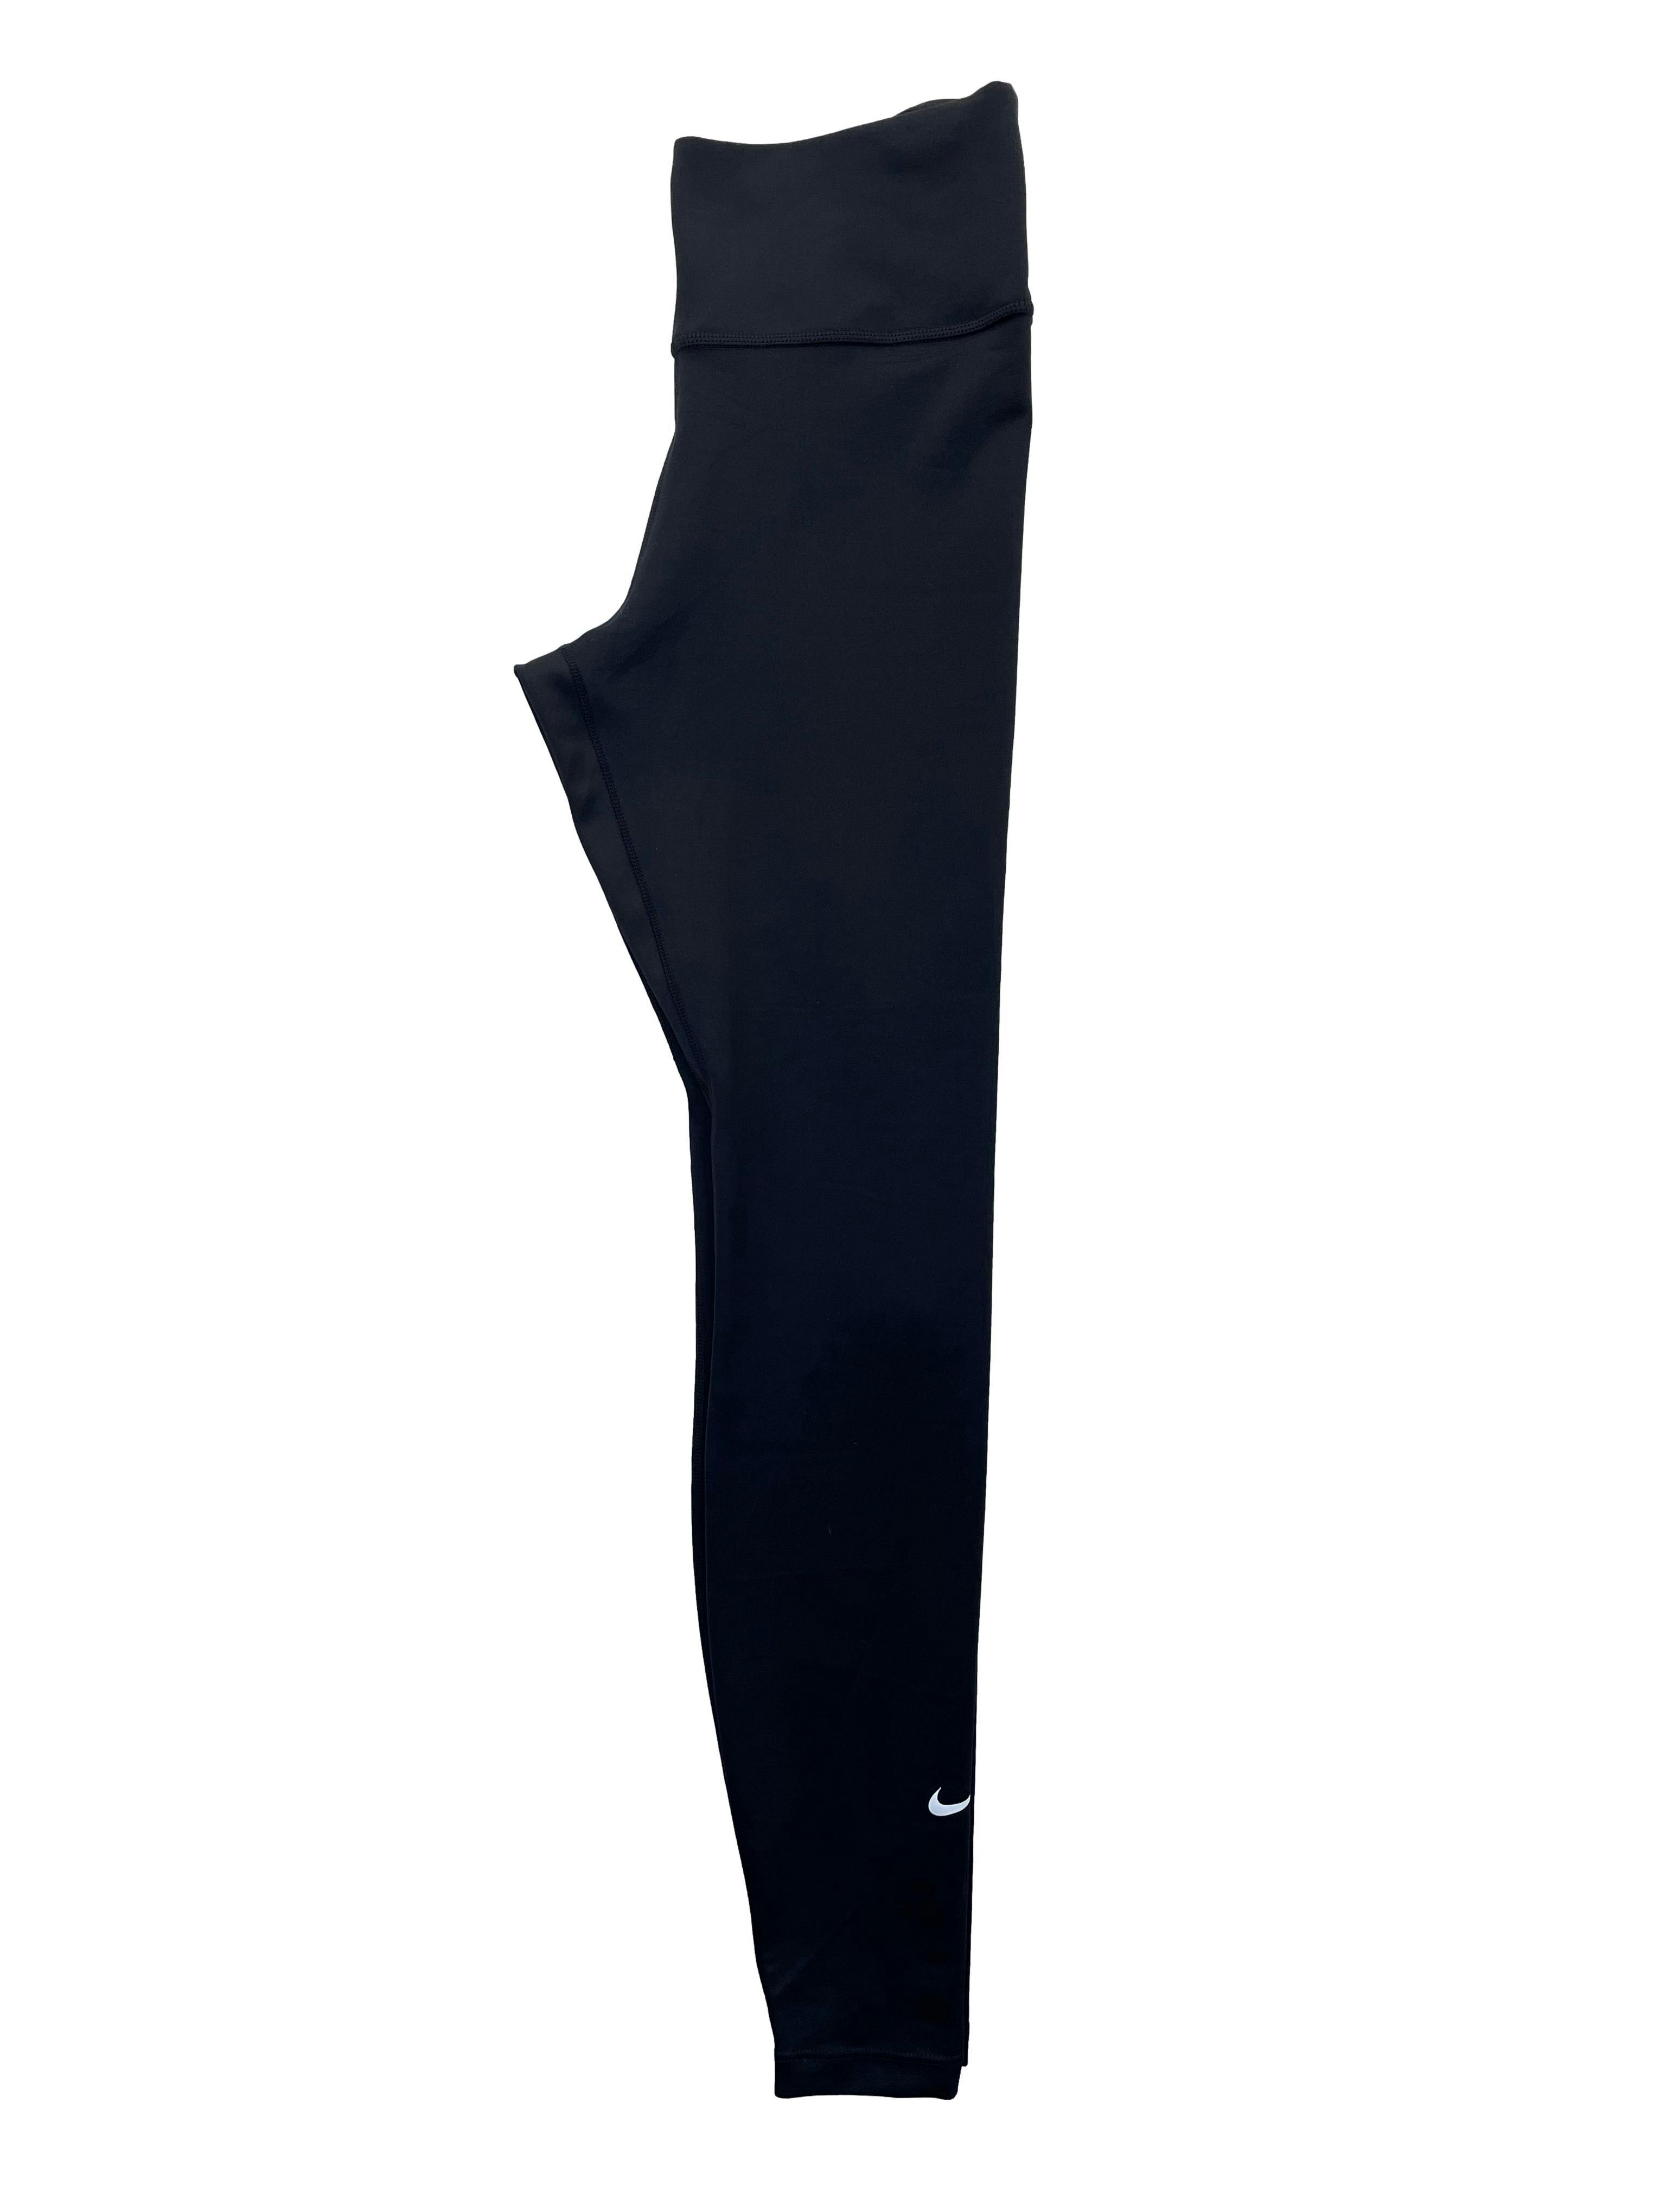 Leggings deportivas Nike negras con "swoosh" blanco en una pierna. Cintura 60cm Tiro 26cm Largo 90cm